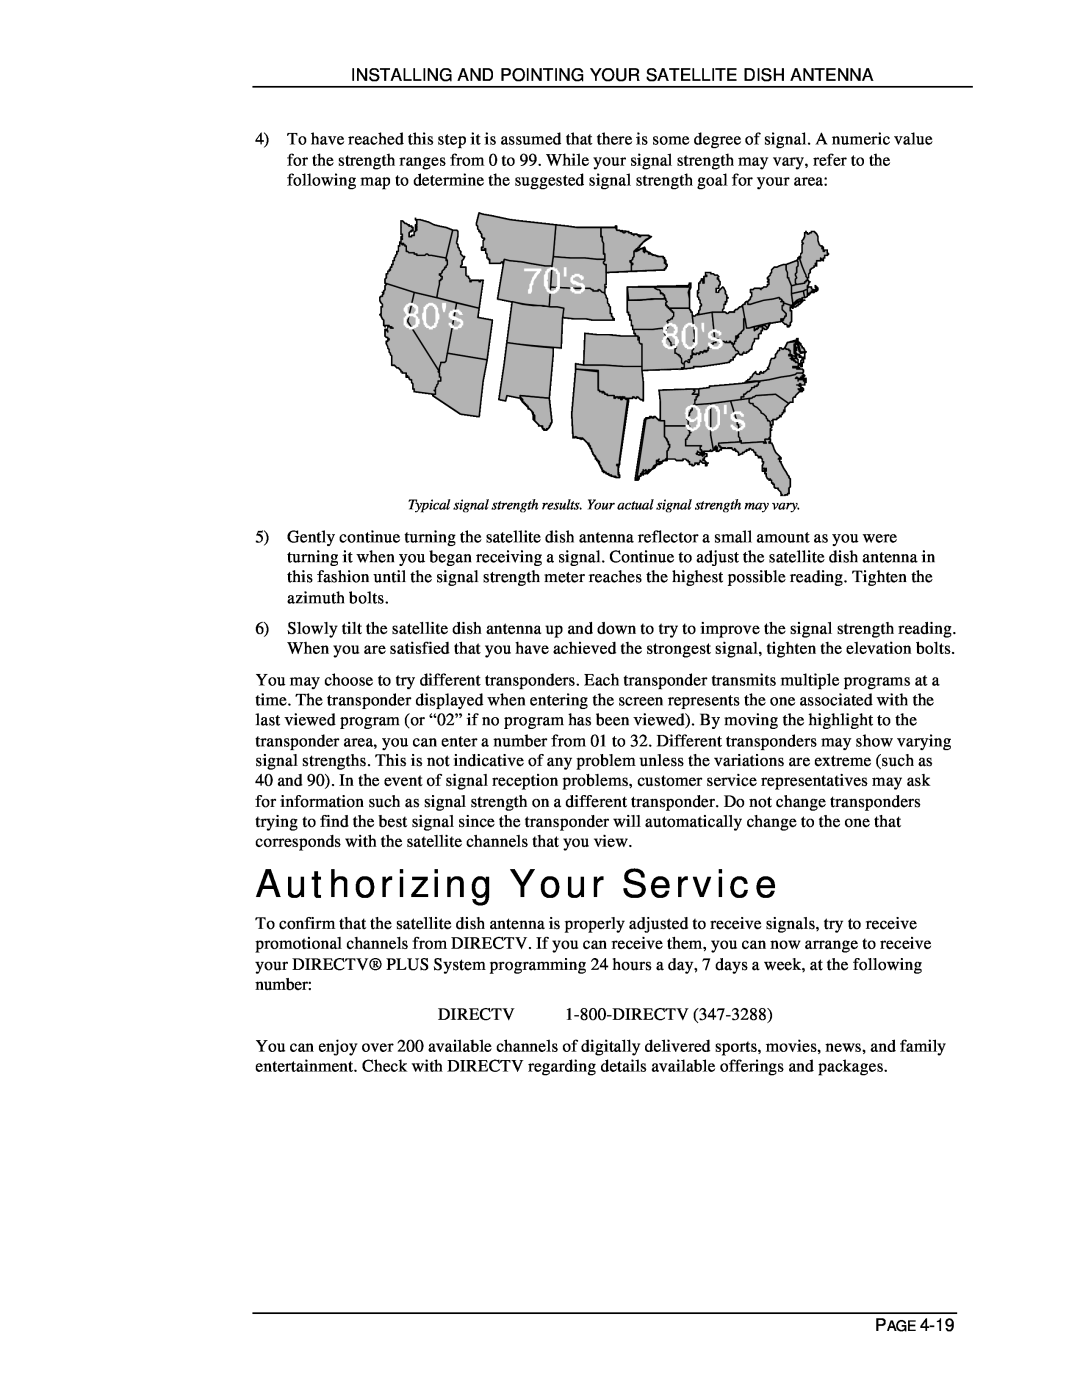 DirecTV HIRD-E11, HIRD-E25 owner manual Authorizing Your Service 